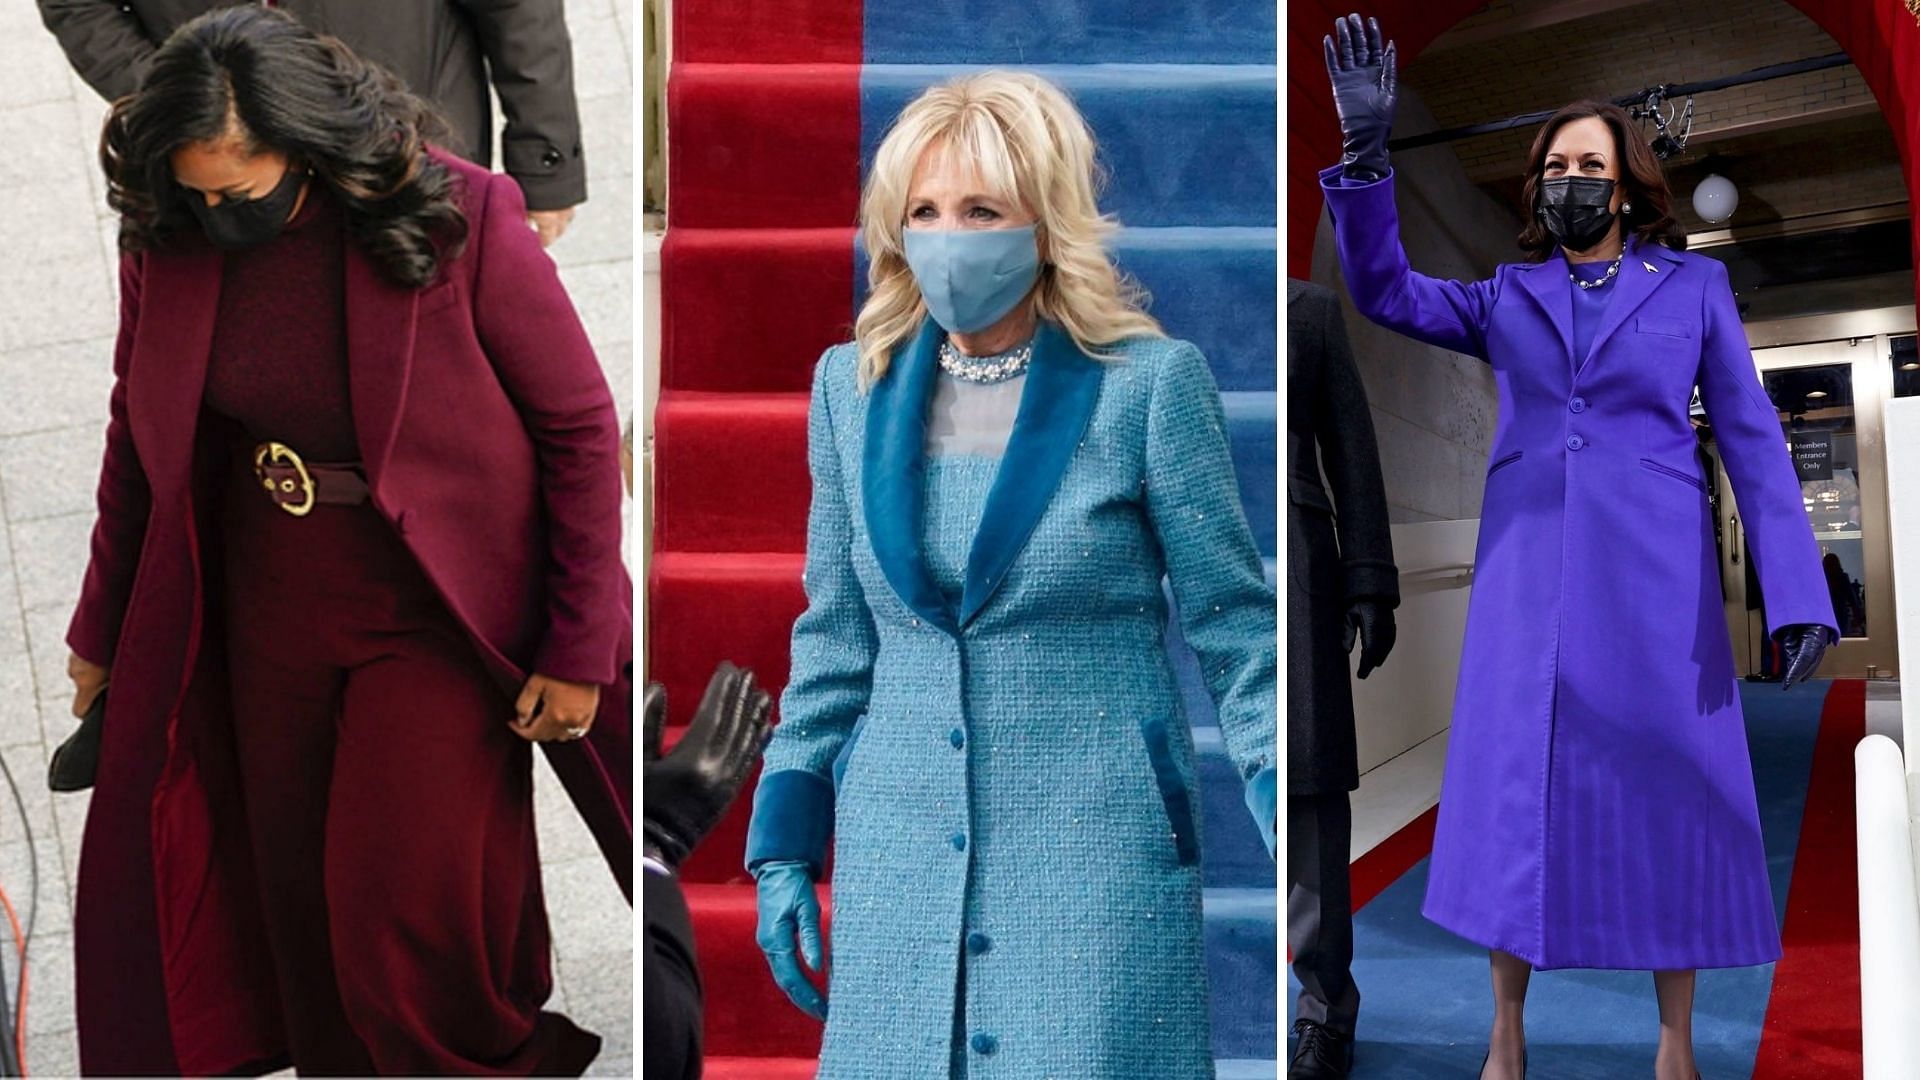 Michelle Obama, Jill Biden and Kamala Harris on Inauguration Day